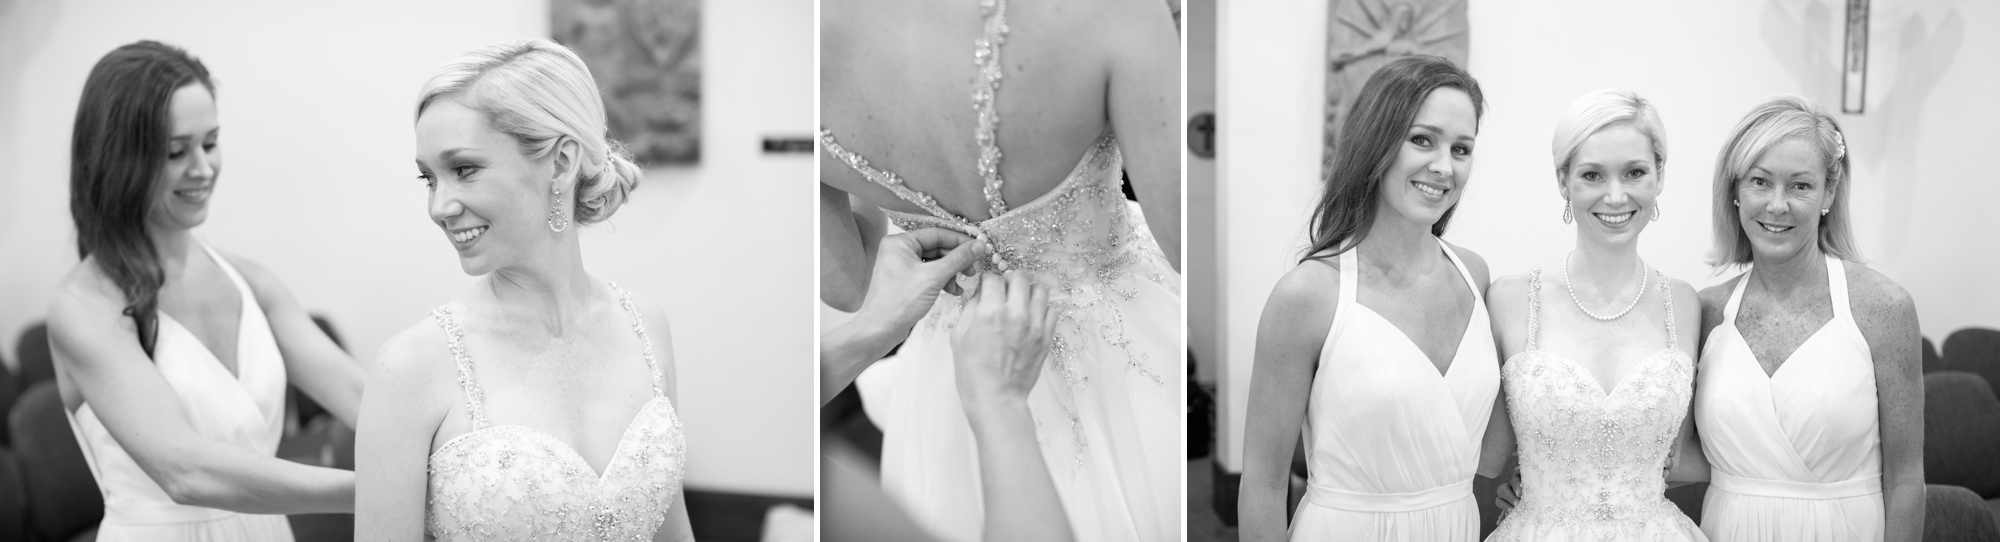 Wedding Dress Photographs VA